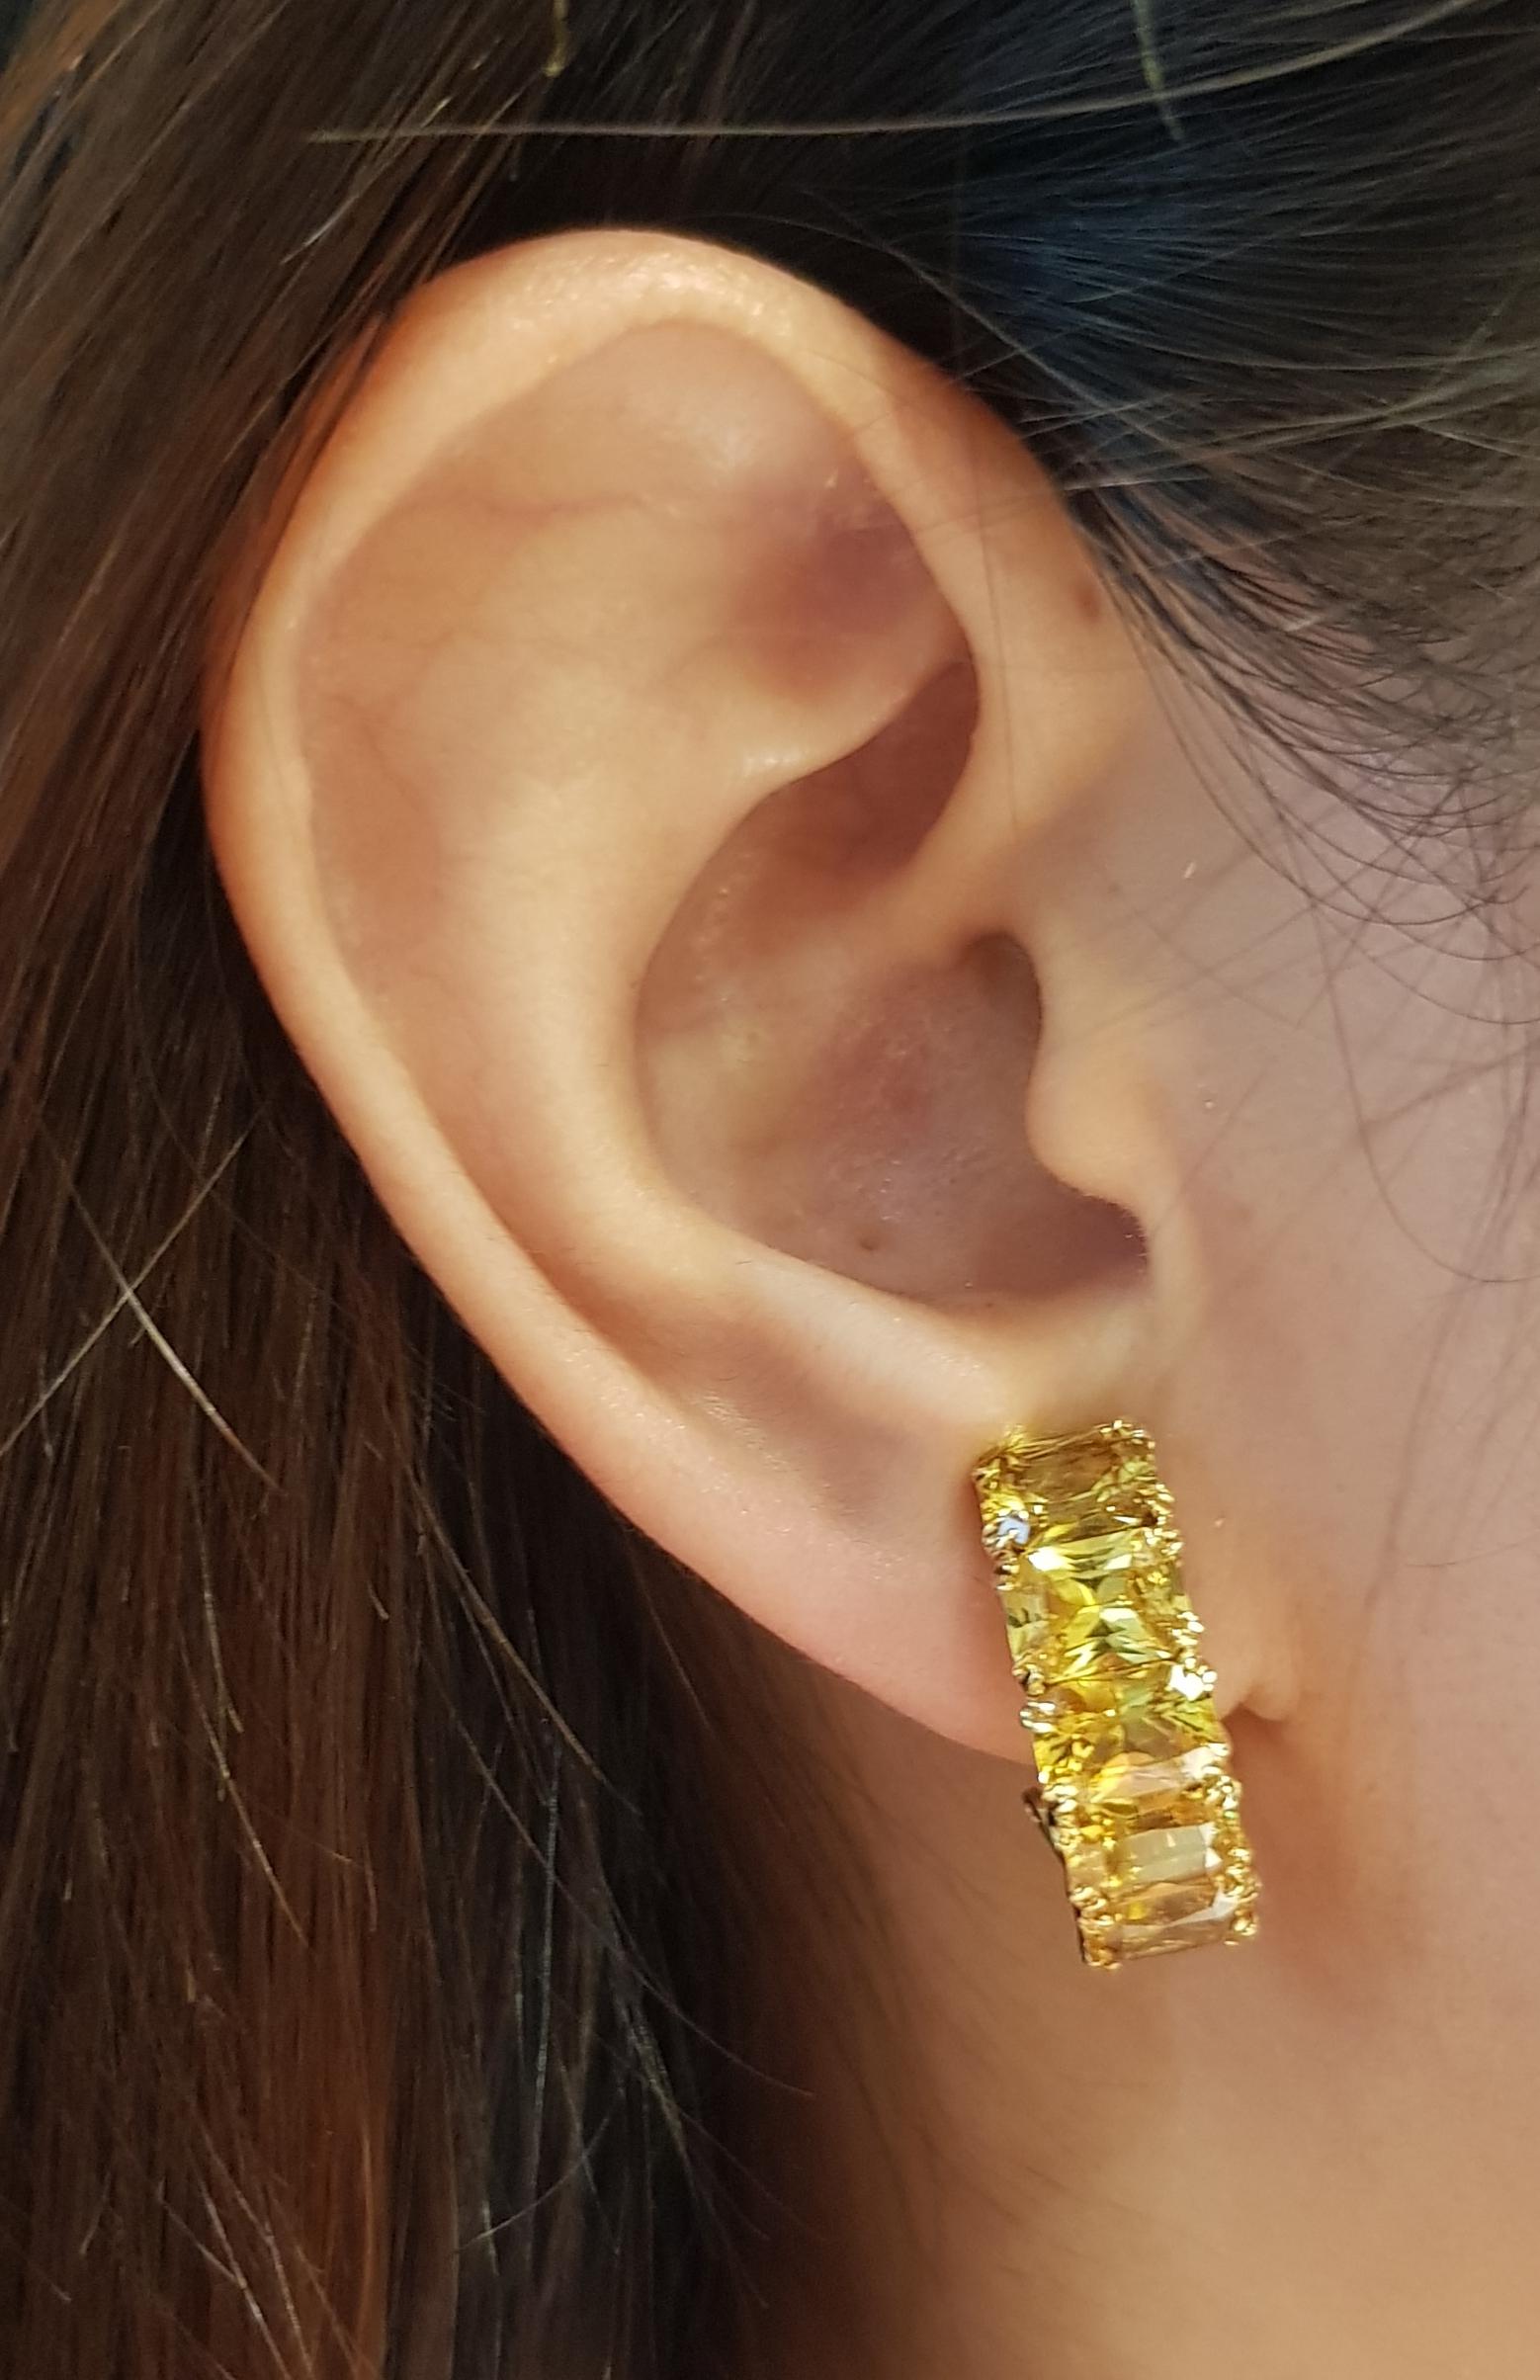 Yellow Sapphire 10.99 carats Earrings set in 18 Karat Gold Settings

Width:   0.7 cm 
Length:  2.2 cm
Total Weight: 10.73 grams

